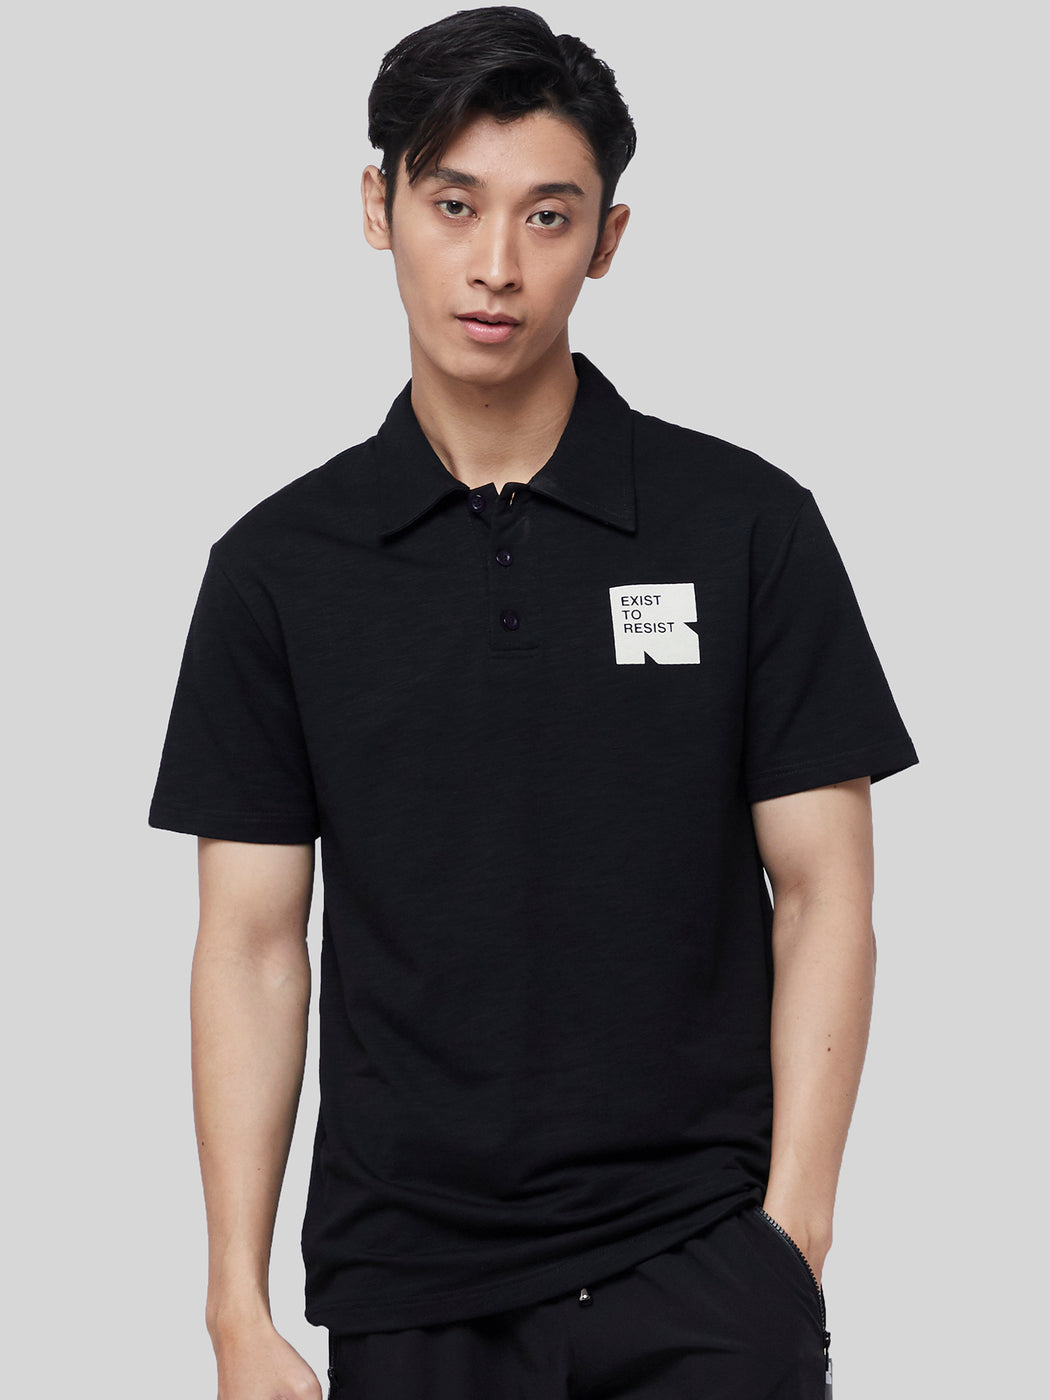 Unisex Everyday Polo Male T-shirt Black